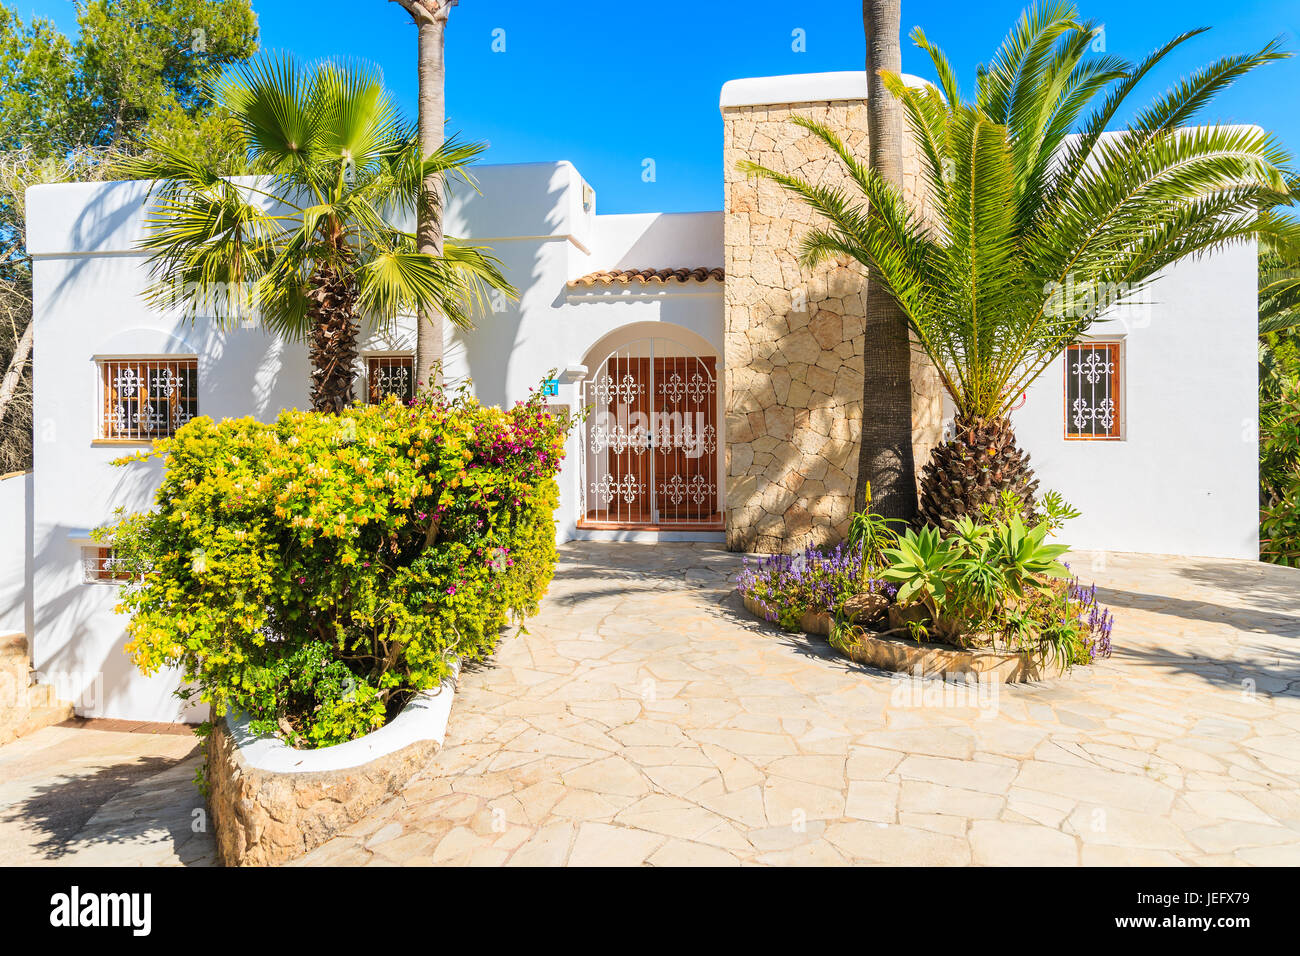 IBIZA ISLAND, SPAIN - MAY 20, 2-17: Luxury white colour holiday villa and palm trees in garden in Cala Nova area of Ibiza island, Spain. Stock Photo